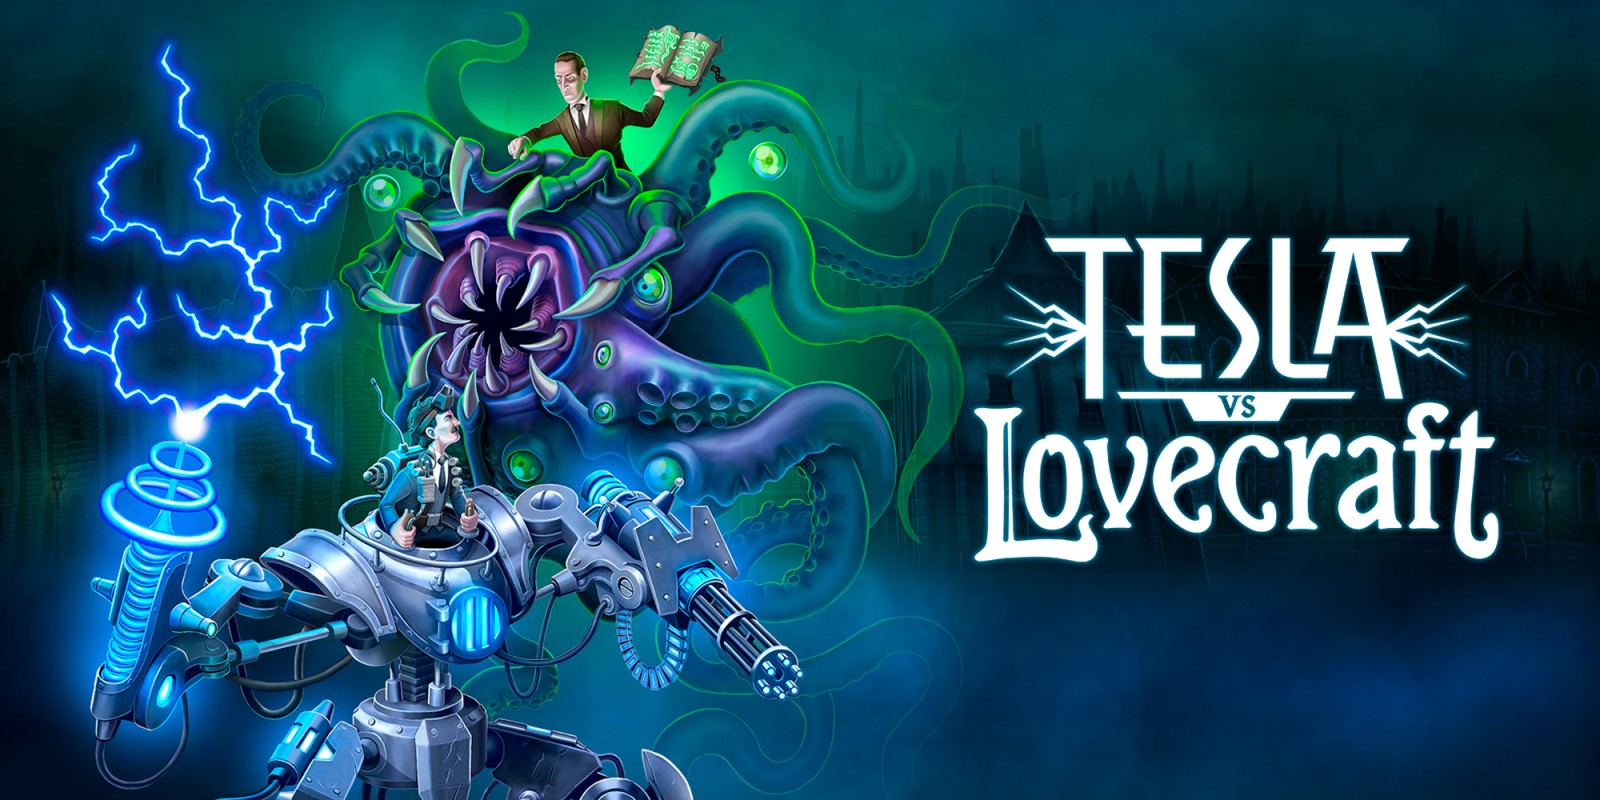 tesla vs lovecraft enemies